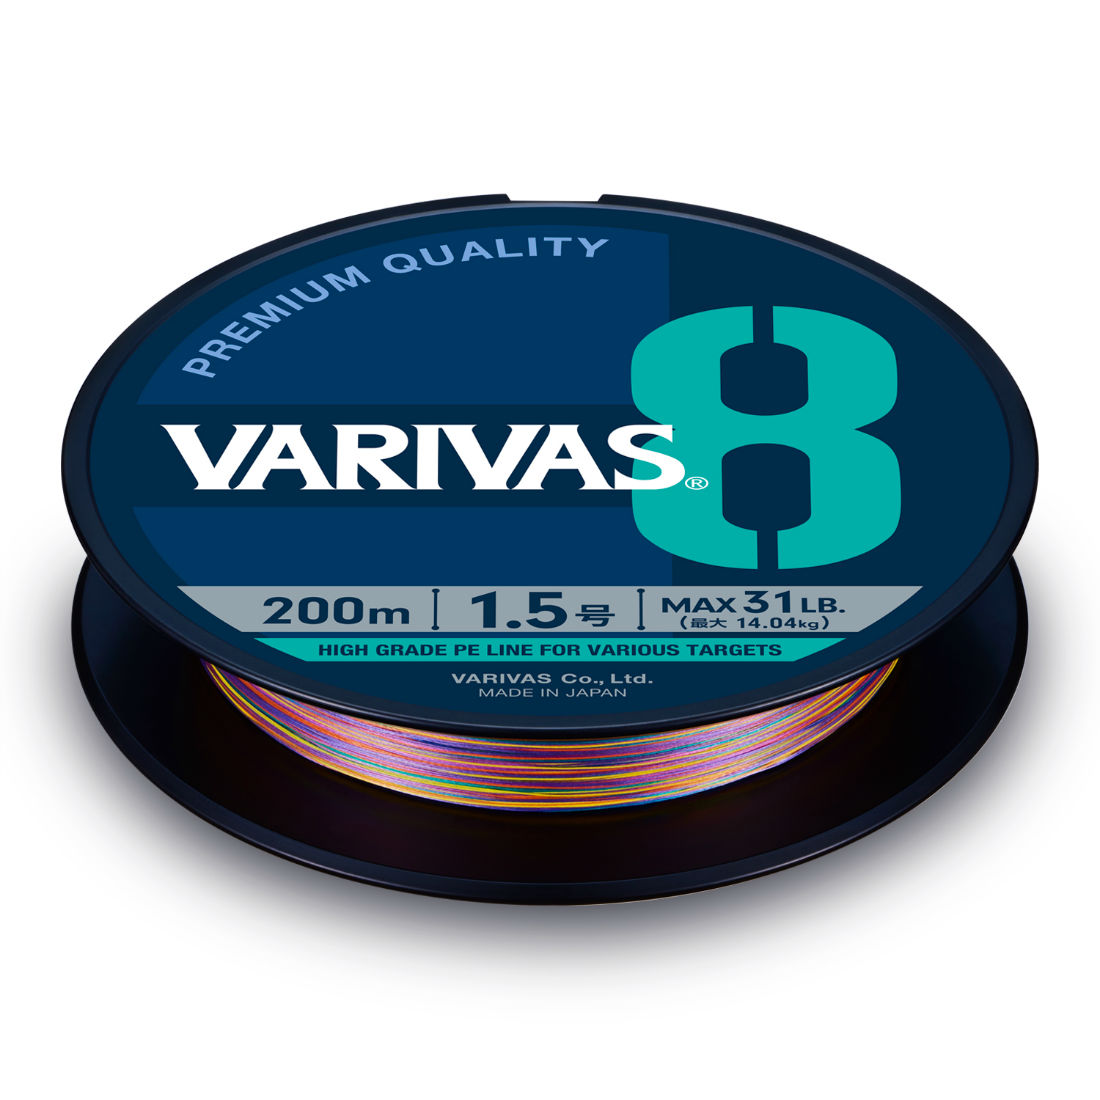 FIR VARIVAS PE 8 MARKING EDITION 300m 0.285mm 46lb Vivid 5 Color